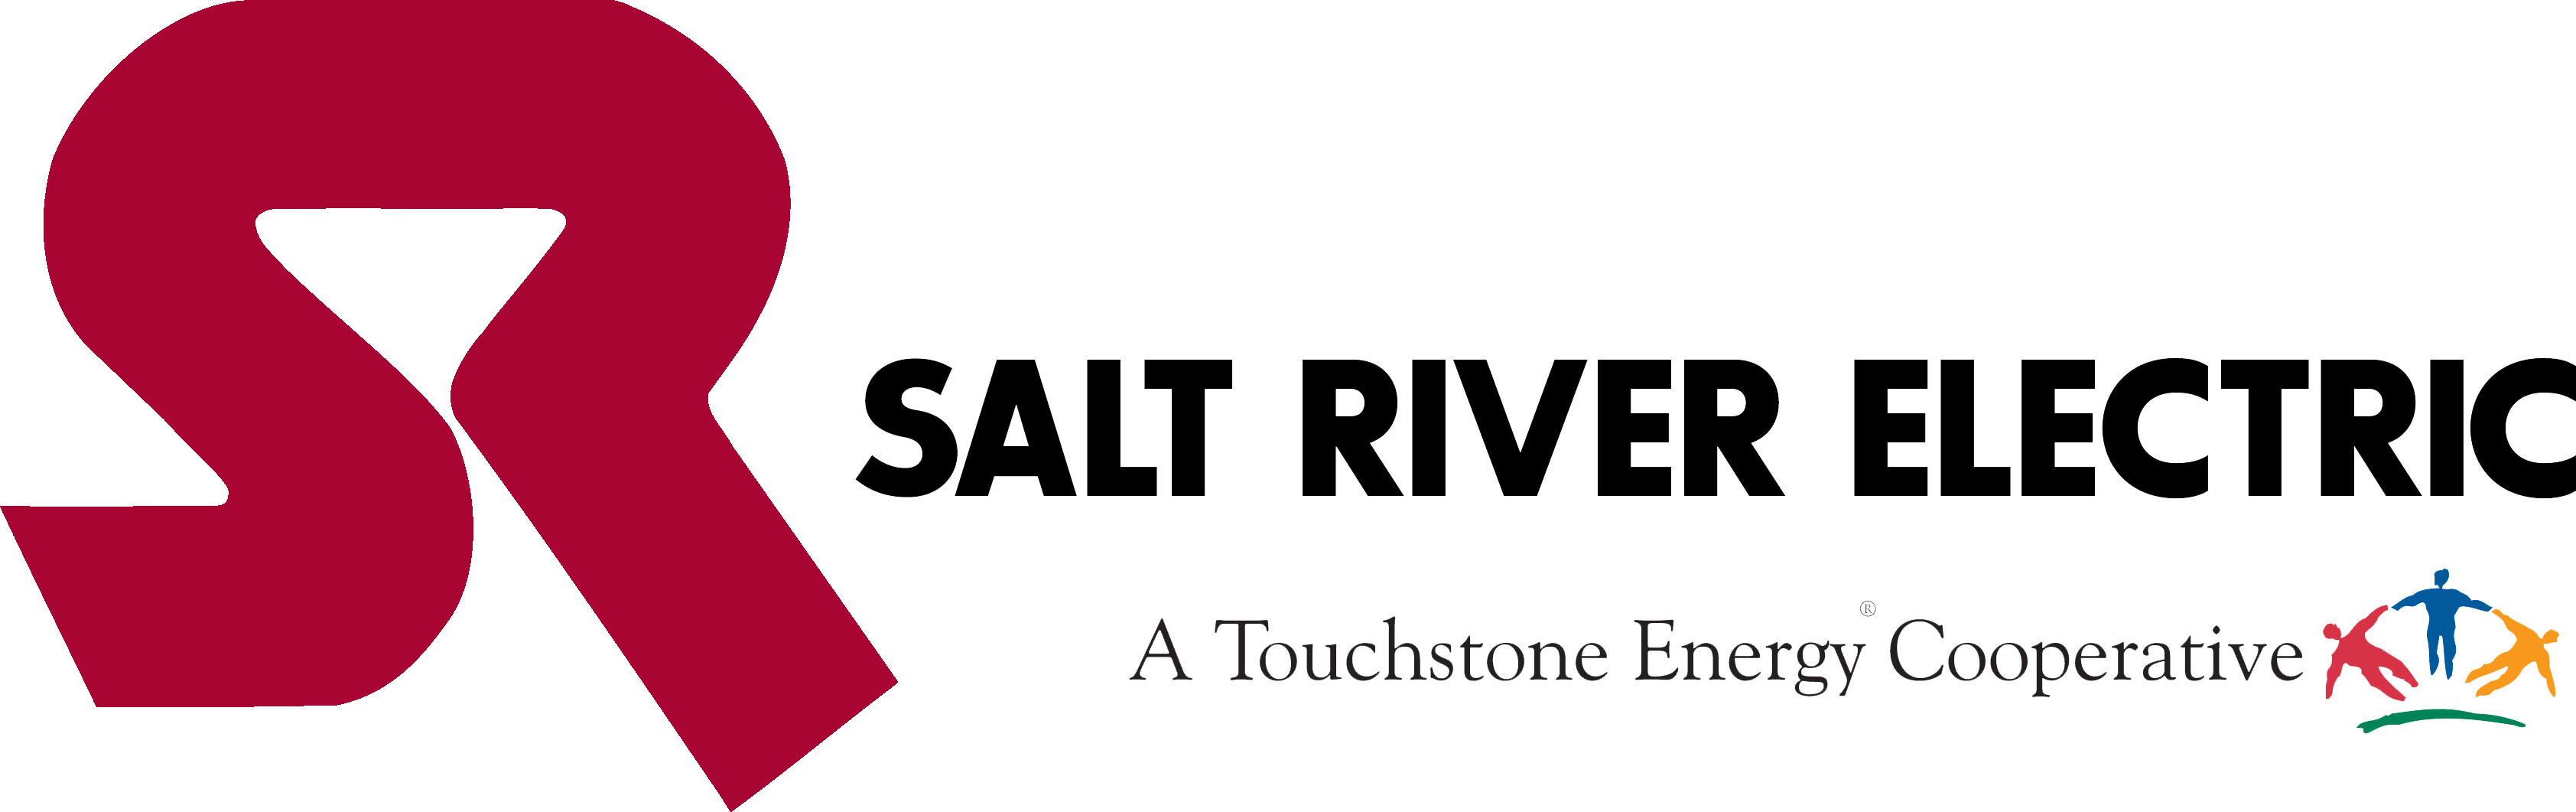 Salt River Electric